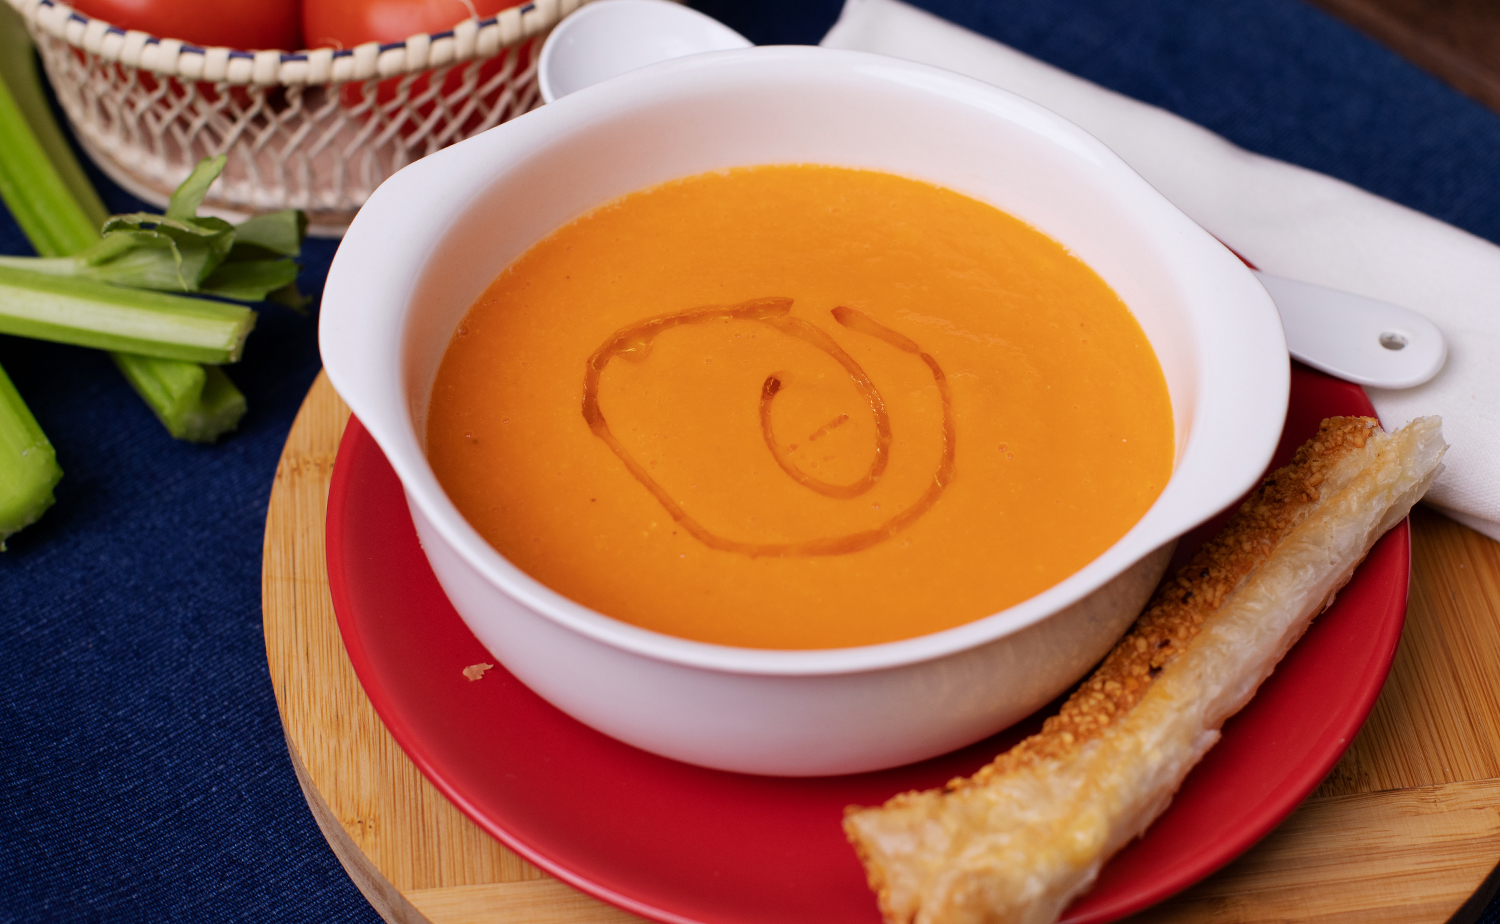 Tomato Soup (ซุปมะเขือเทศ)